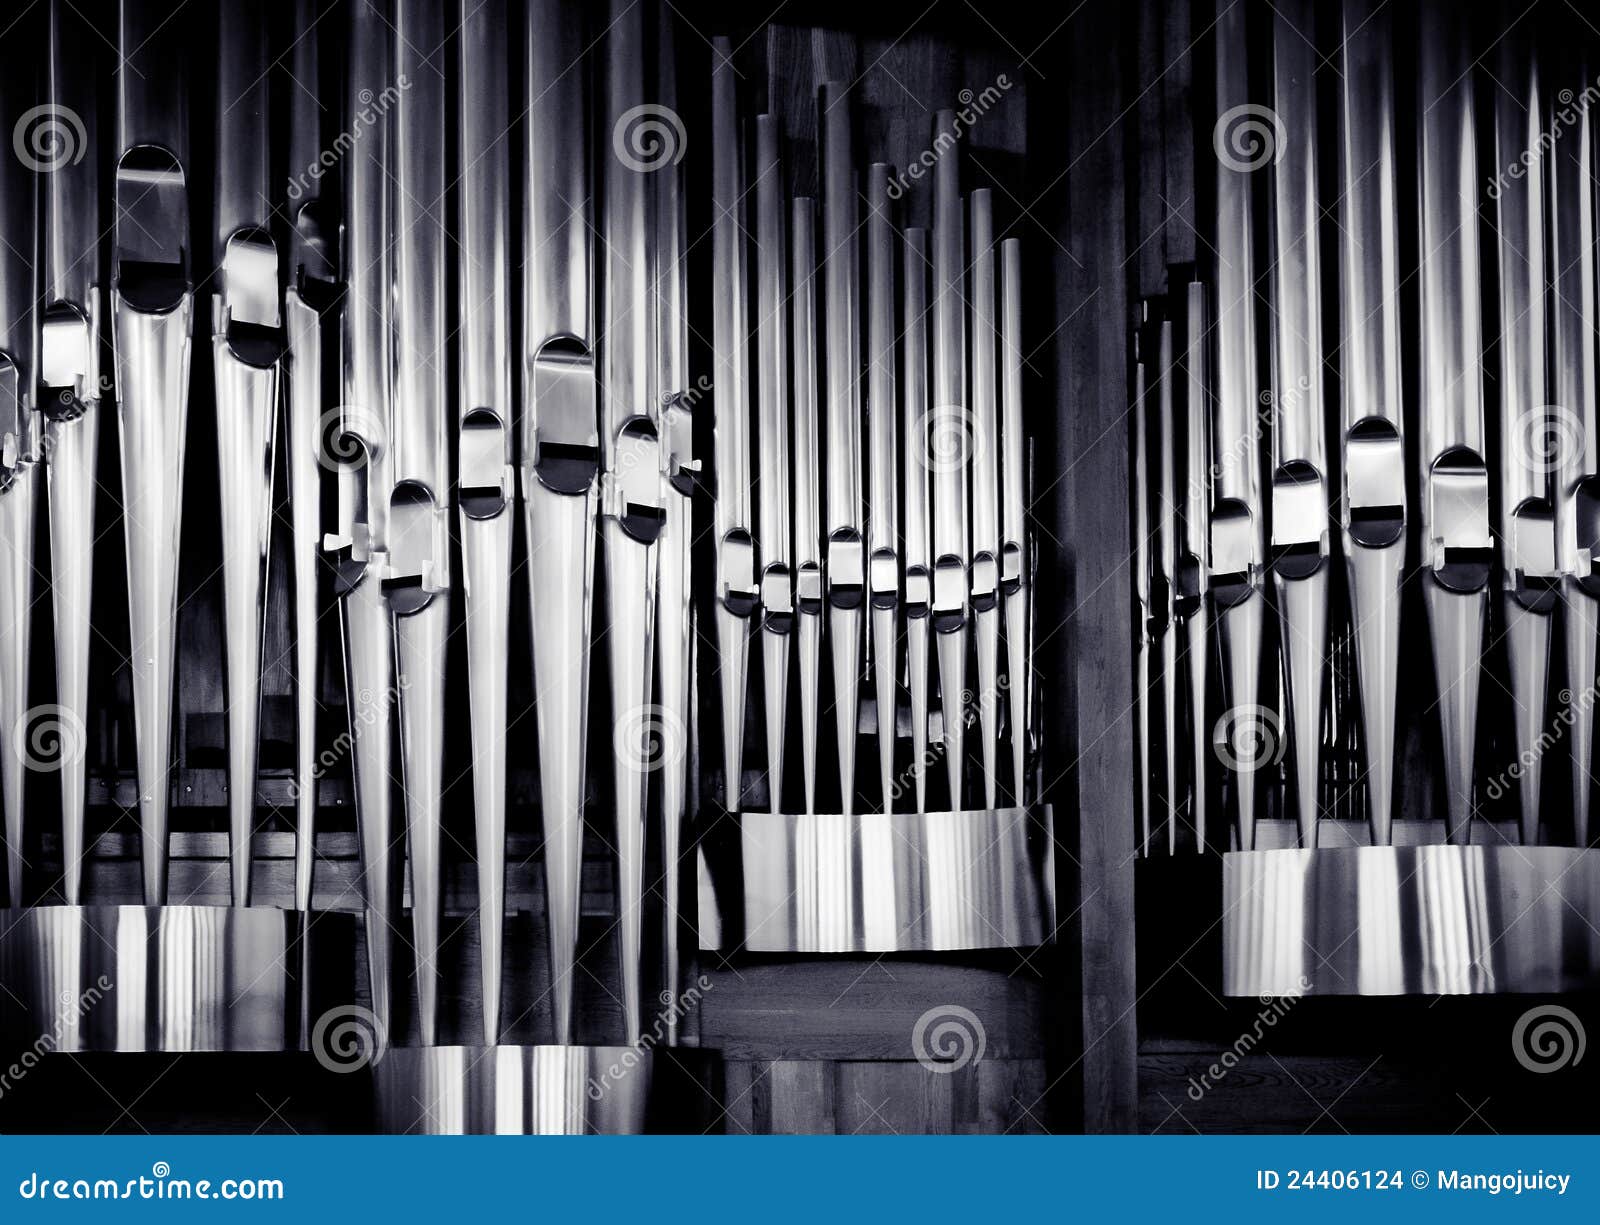 organ pipes clipart - photo #36